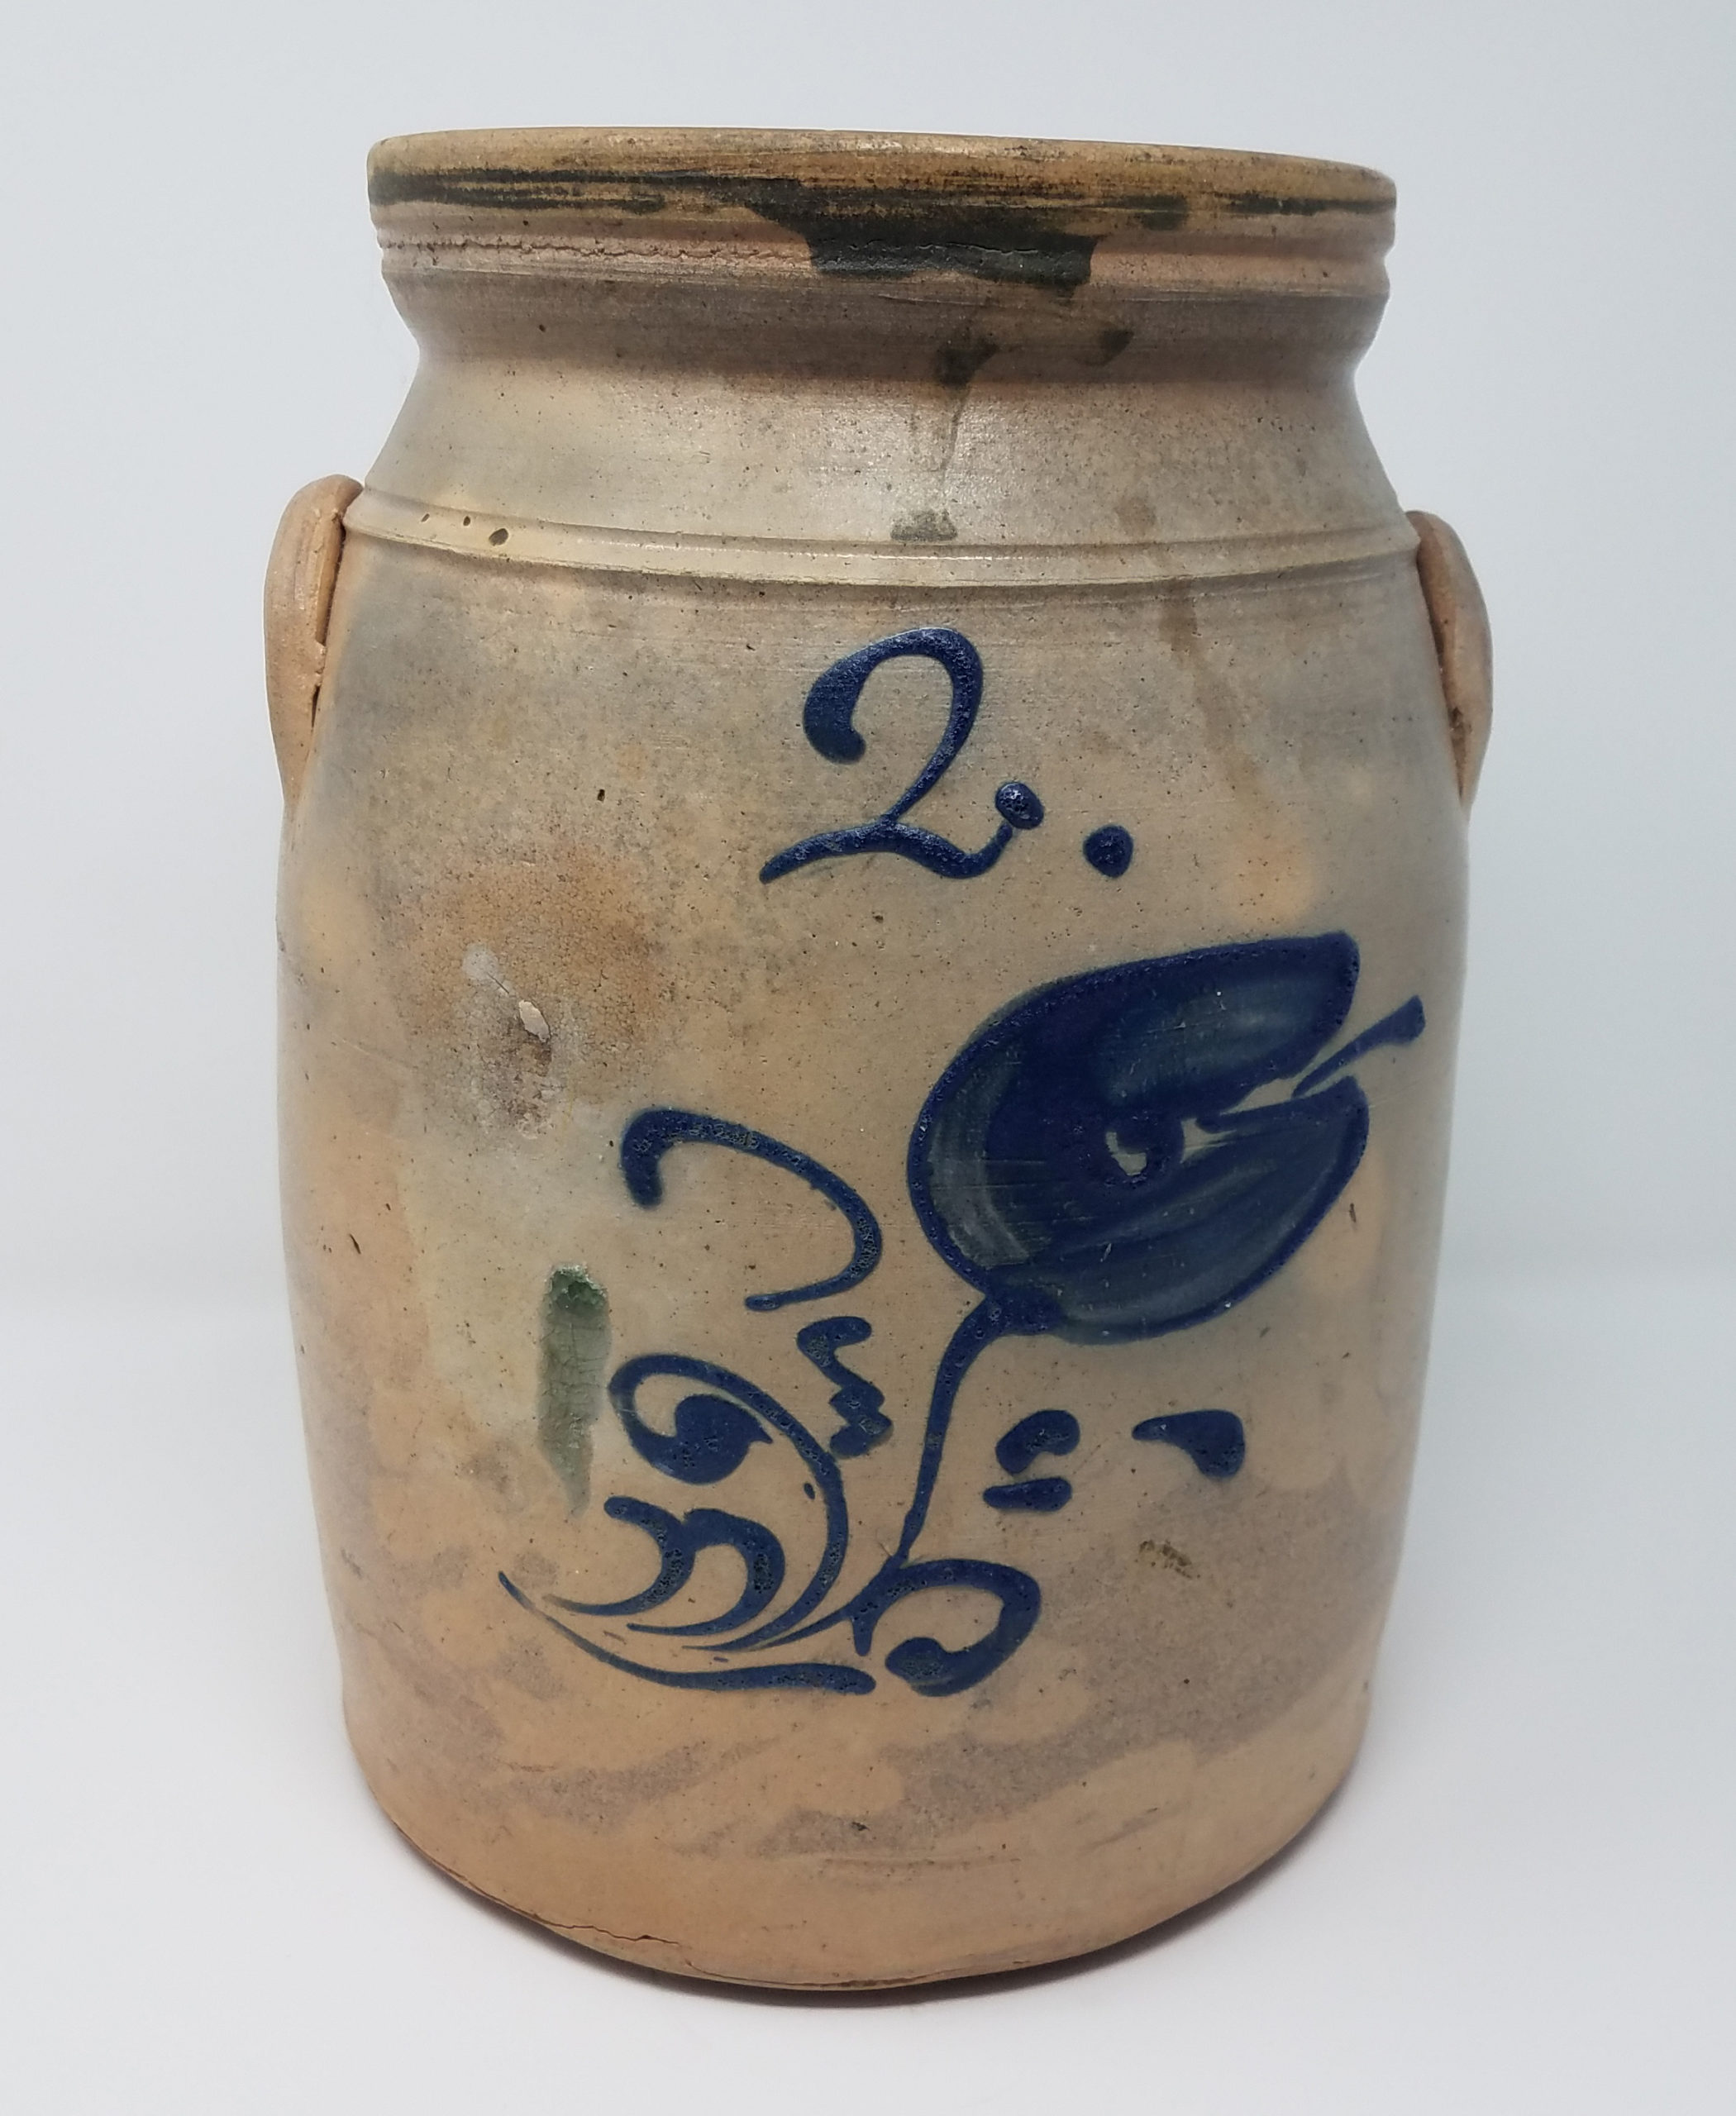 Menasha - Leonard Rohrer Pottery jar